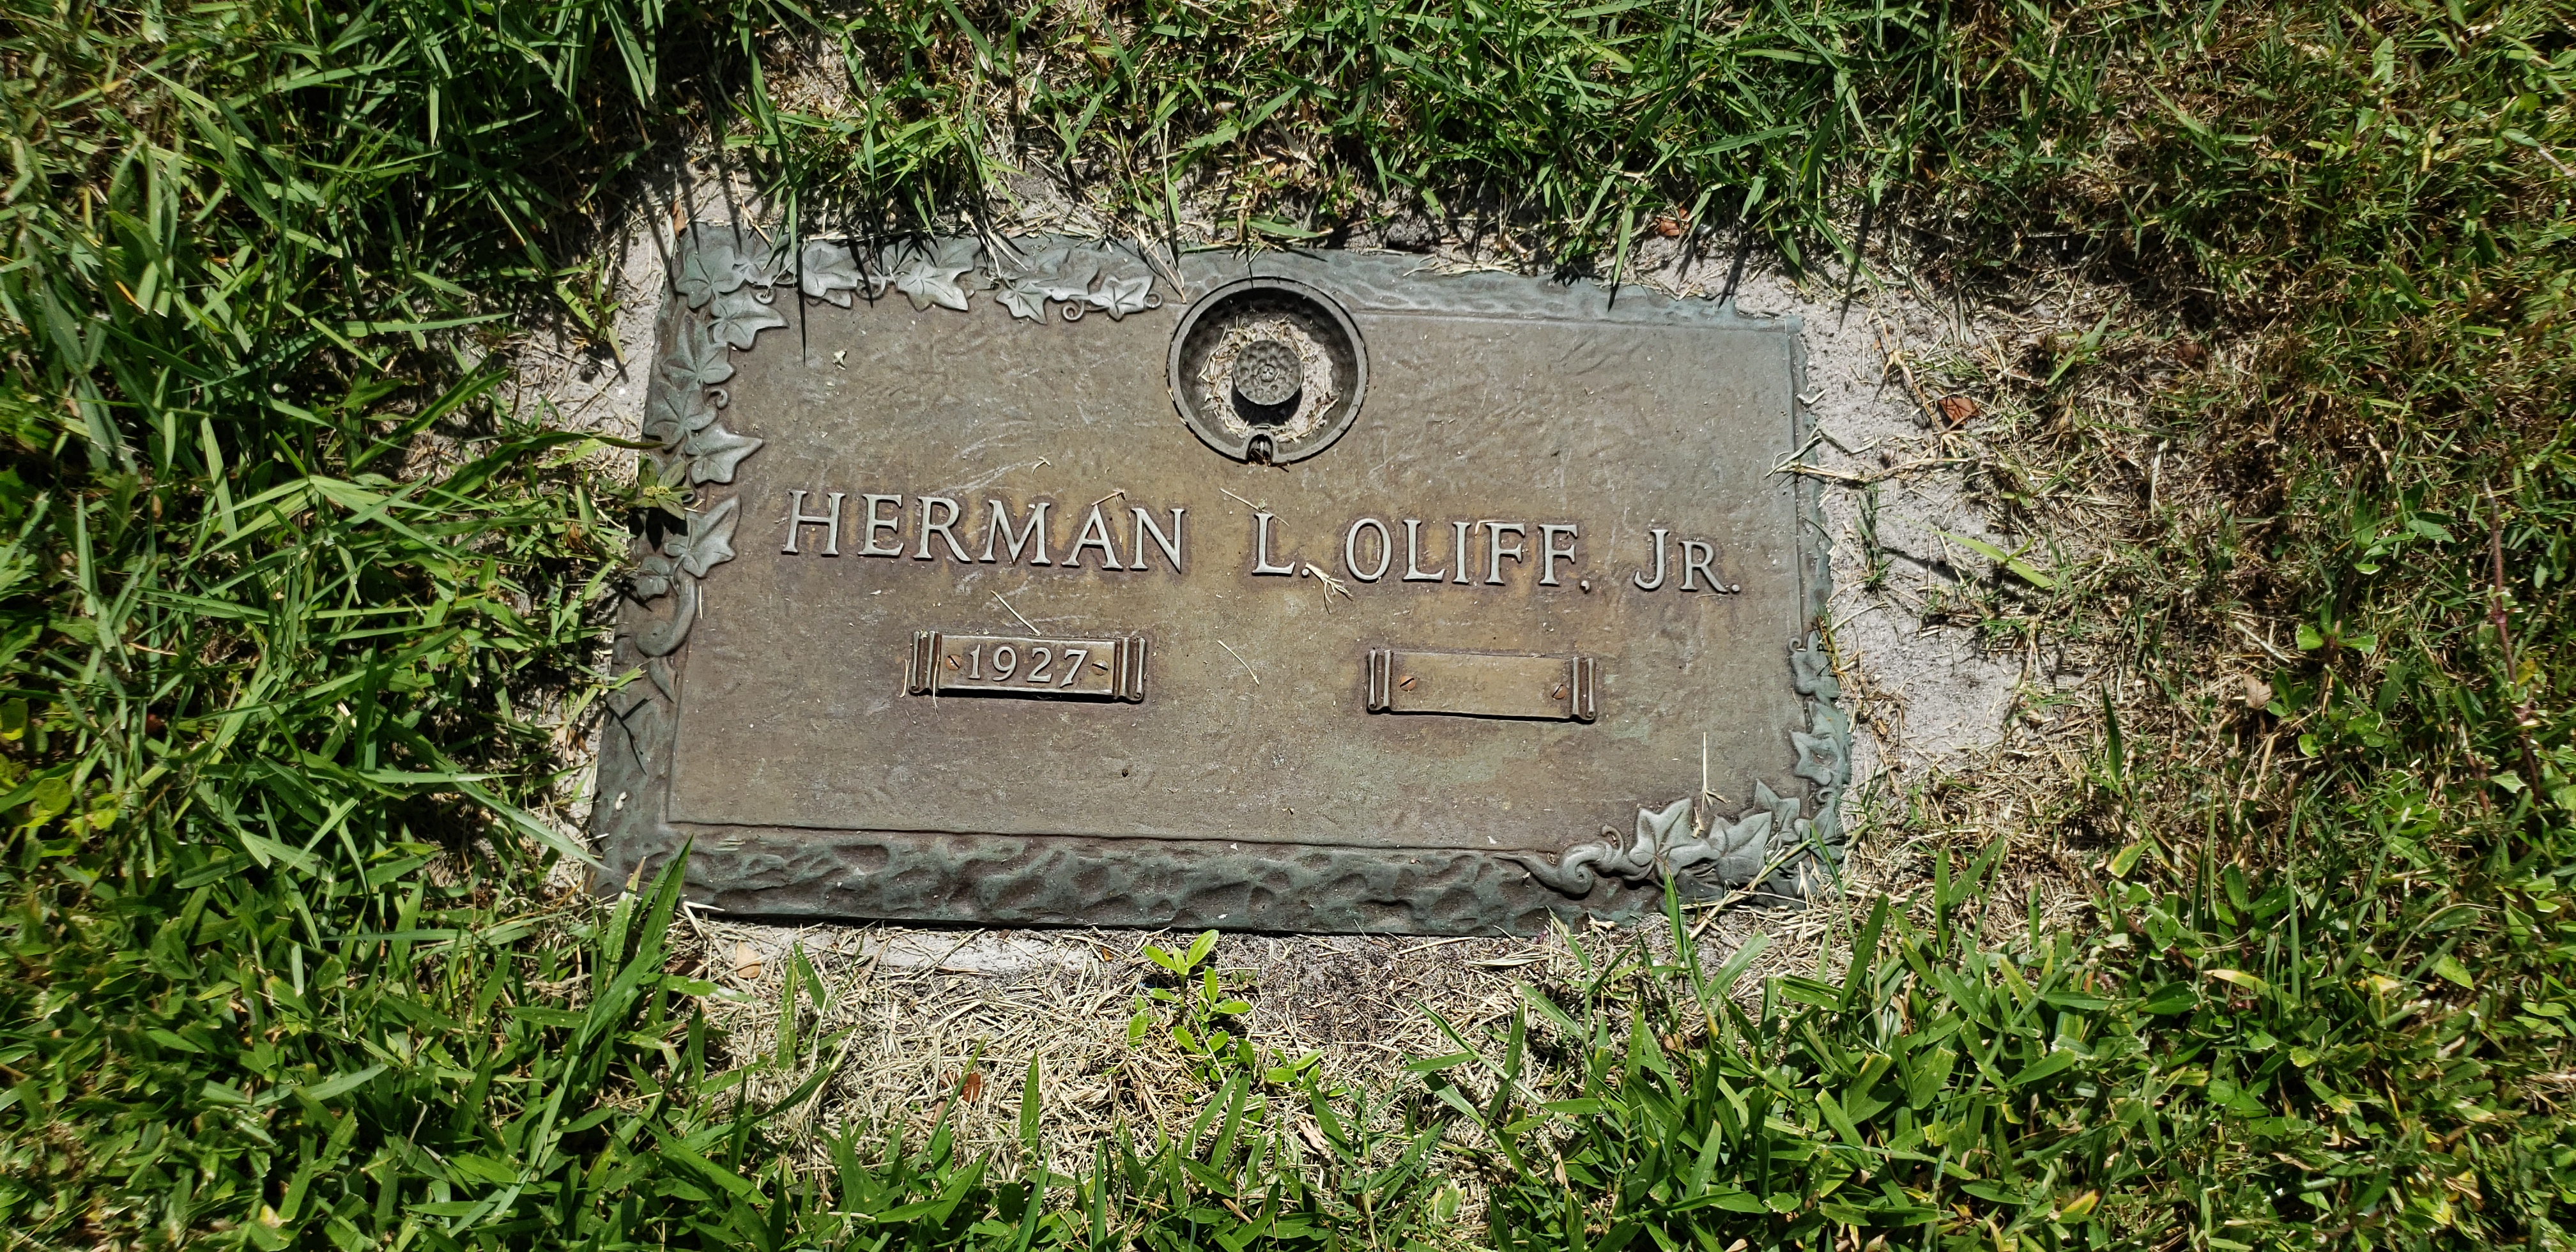 Herman L Oliff, Jr